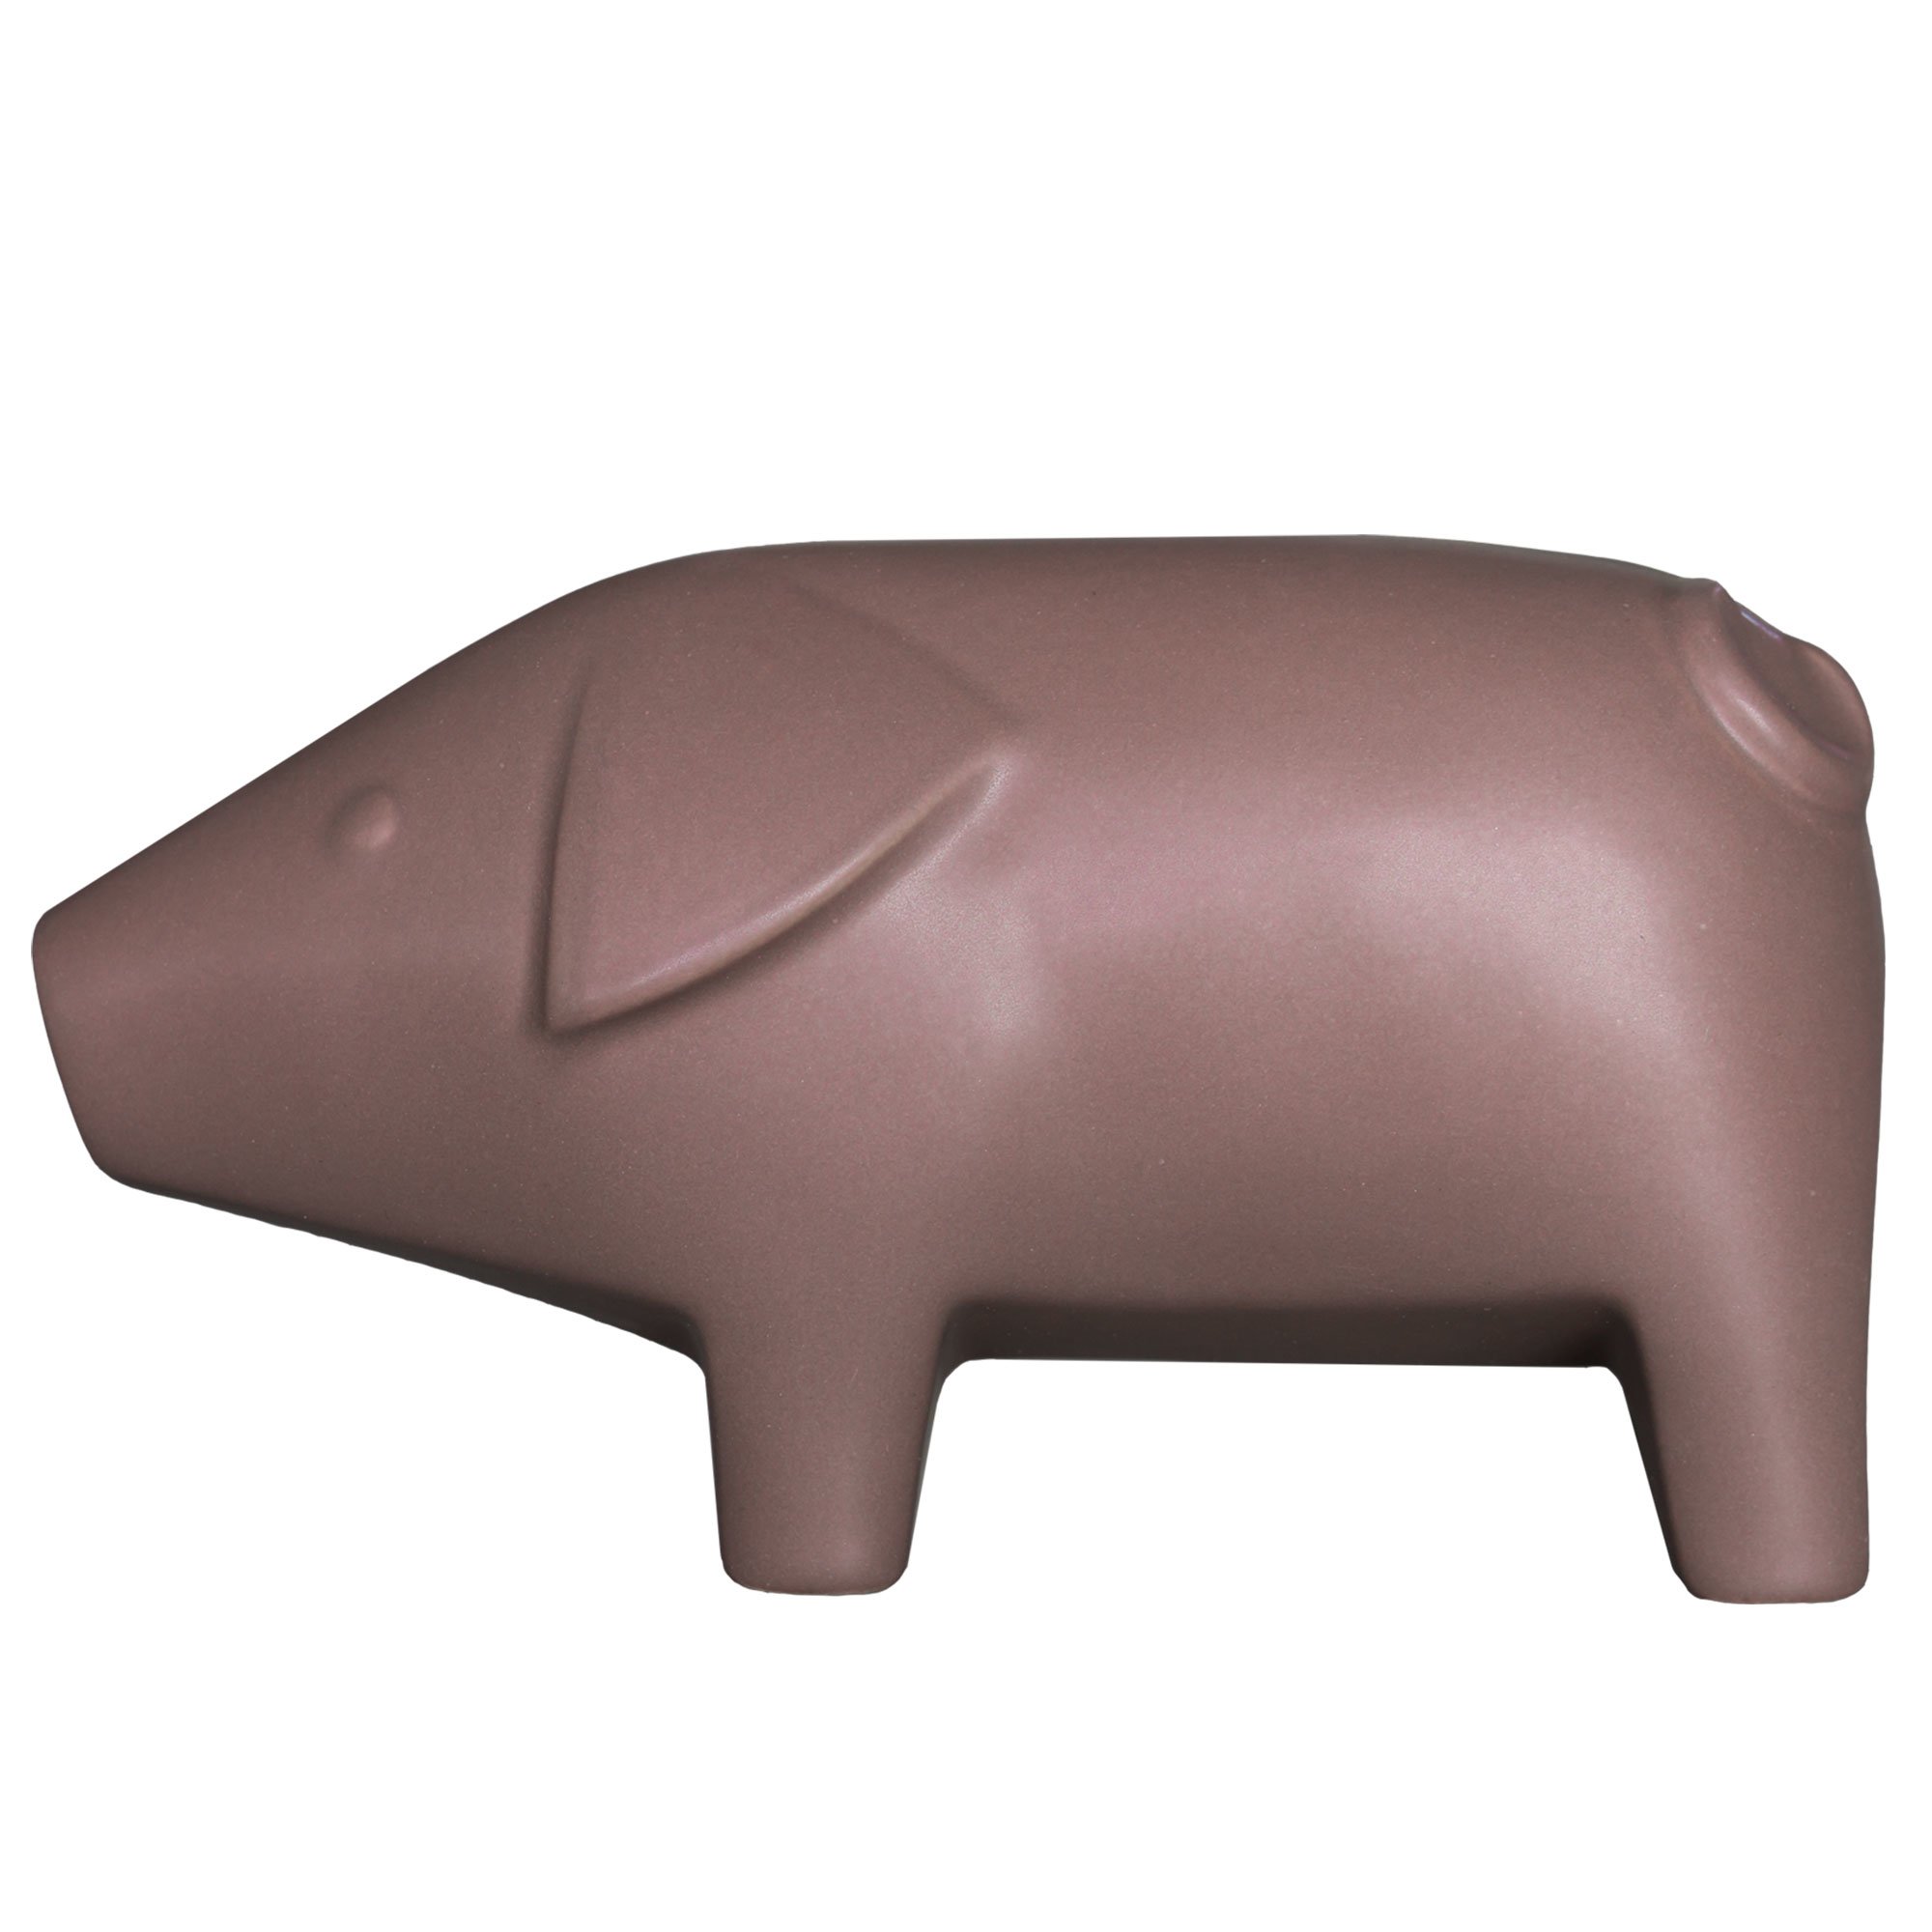 DBKD Swedish Pig Small 16 cm maroon